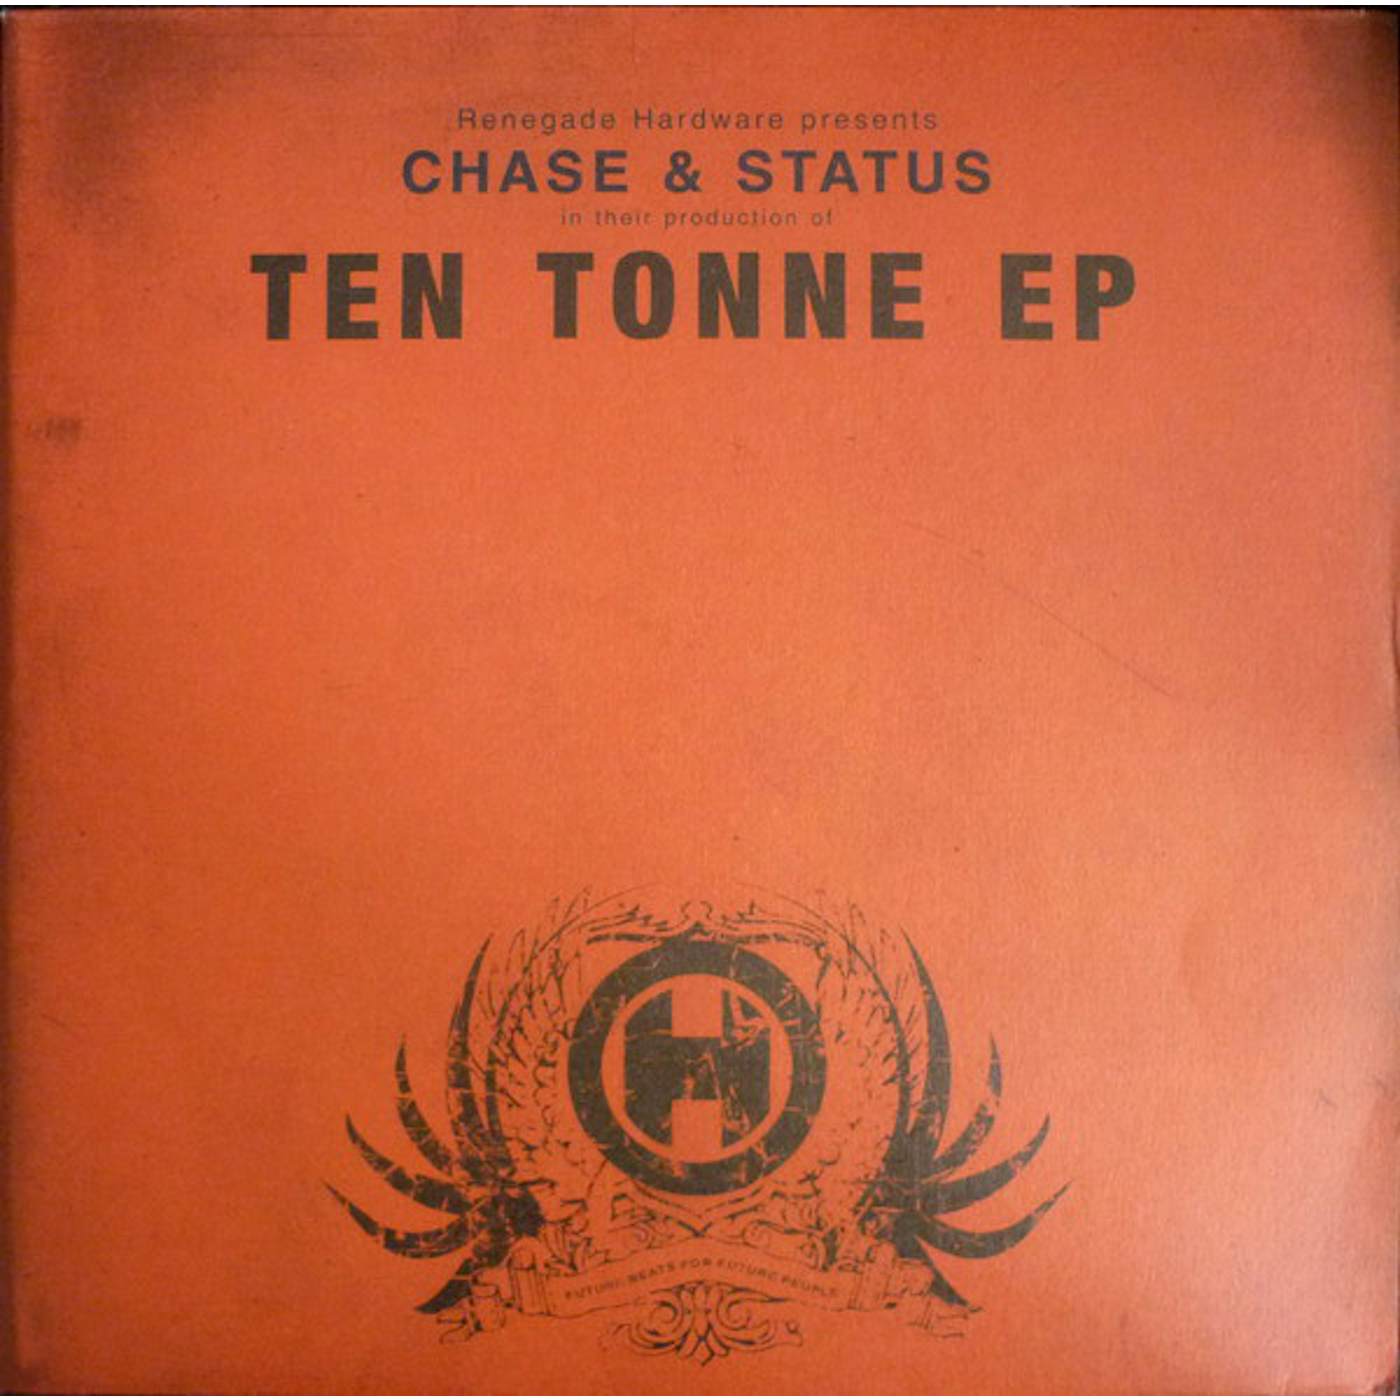 Chase & Status TEN TONNE EP Vinyl Record - UK Release